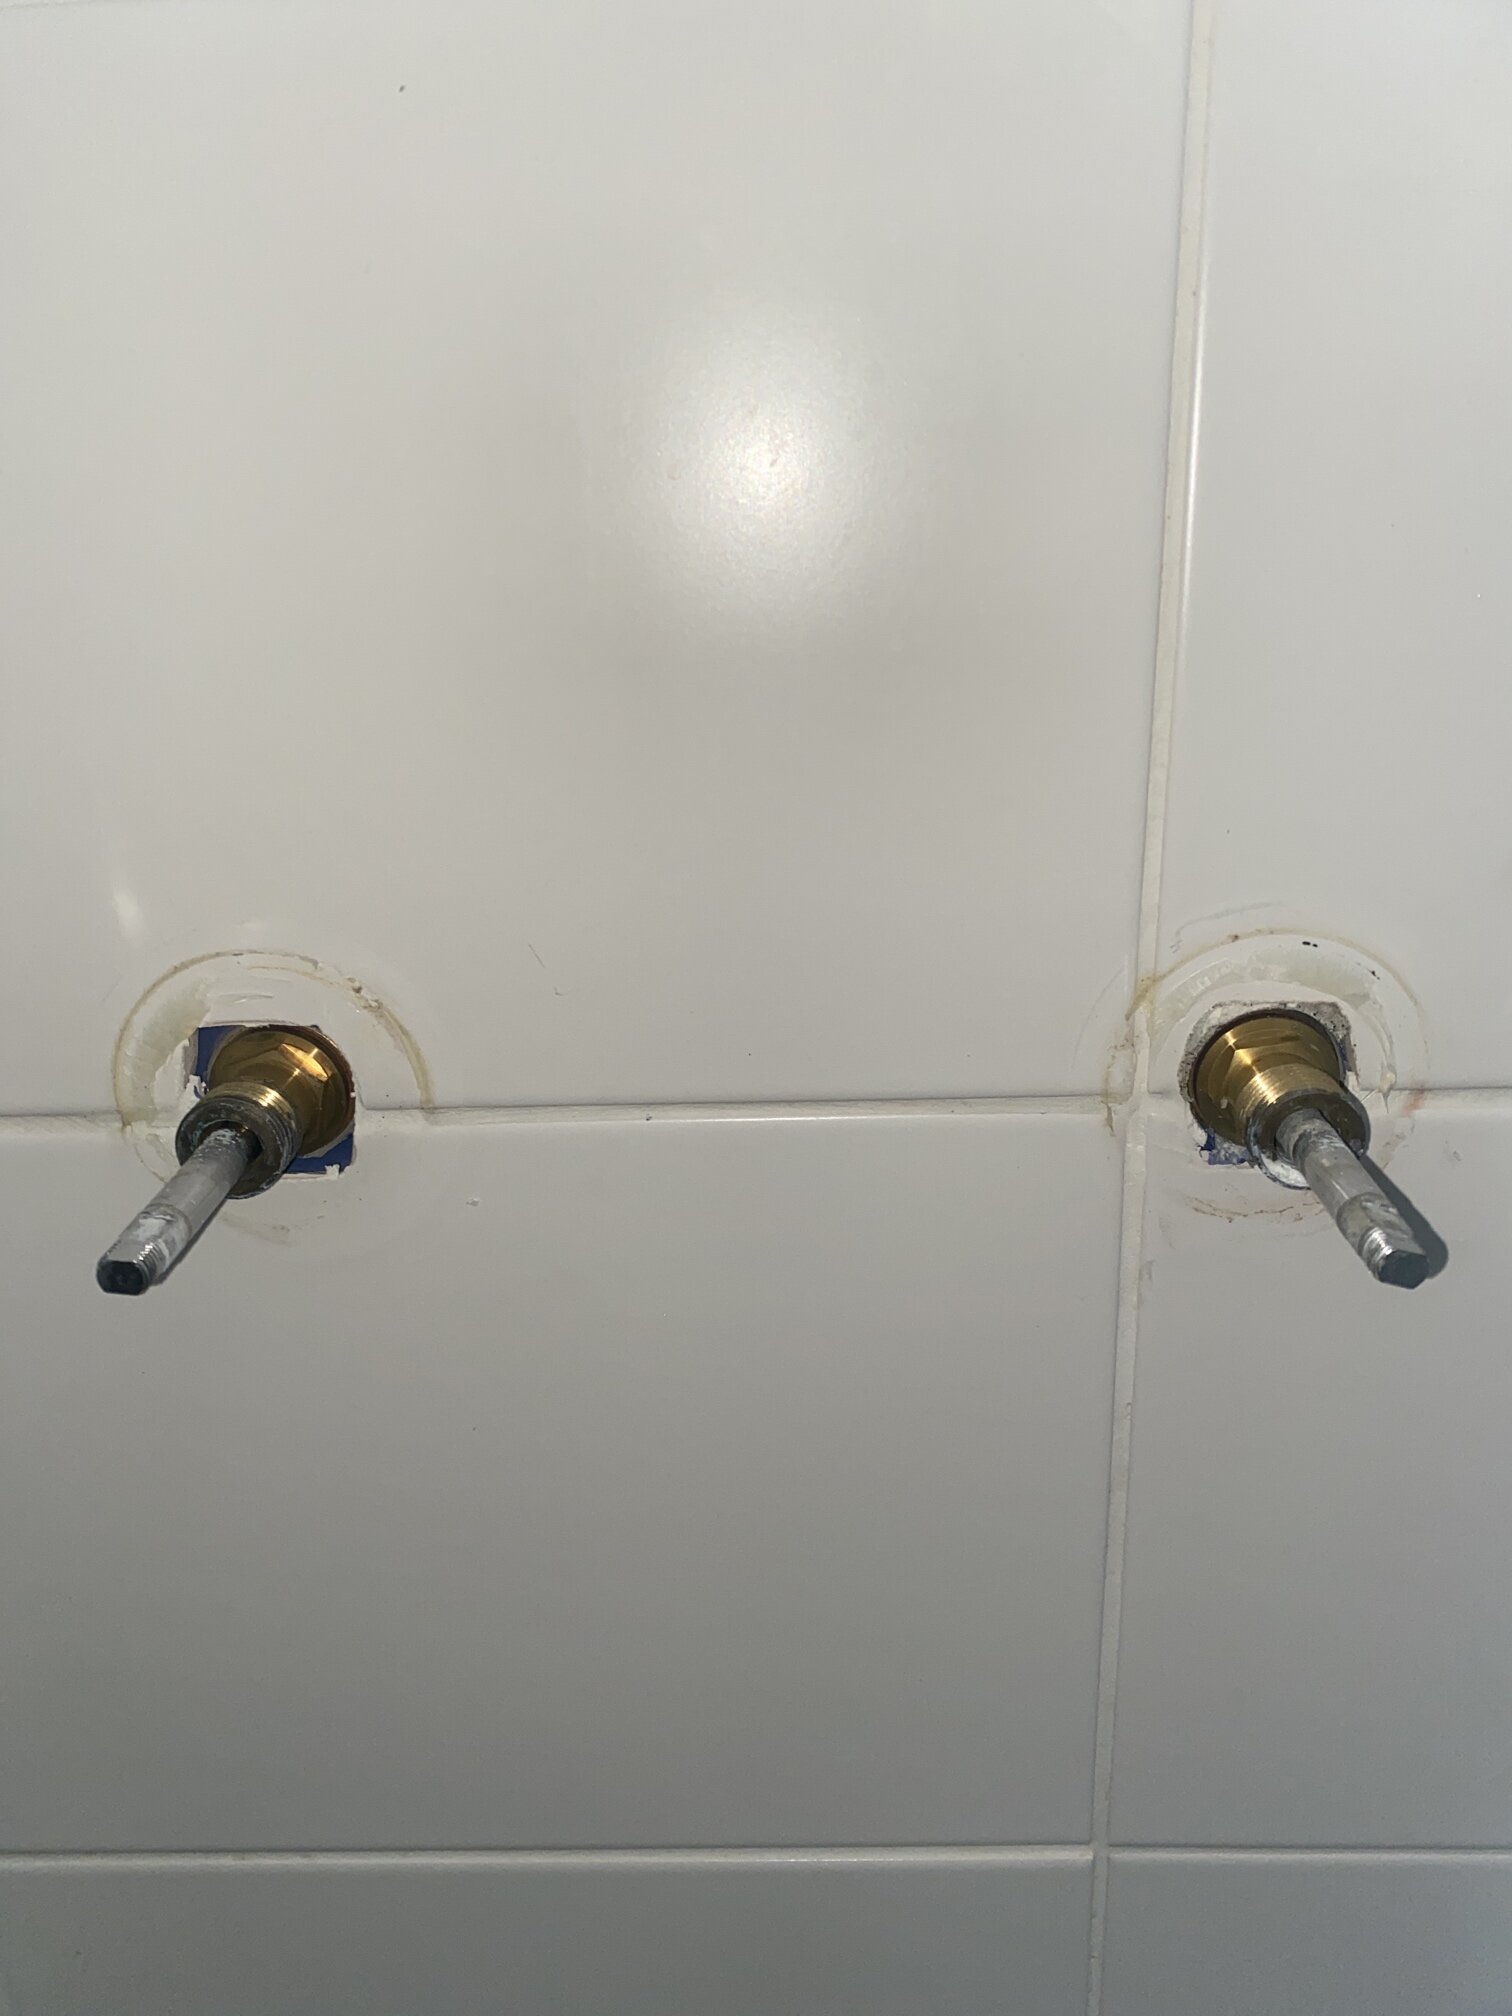 unsealed shower tap penetrations.jpg